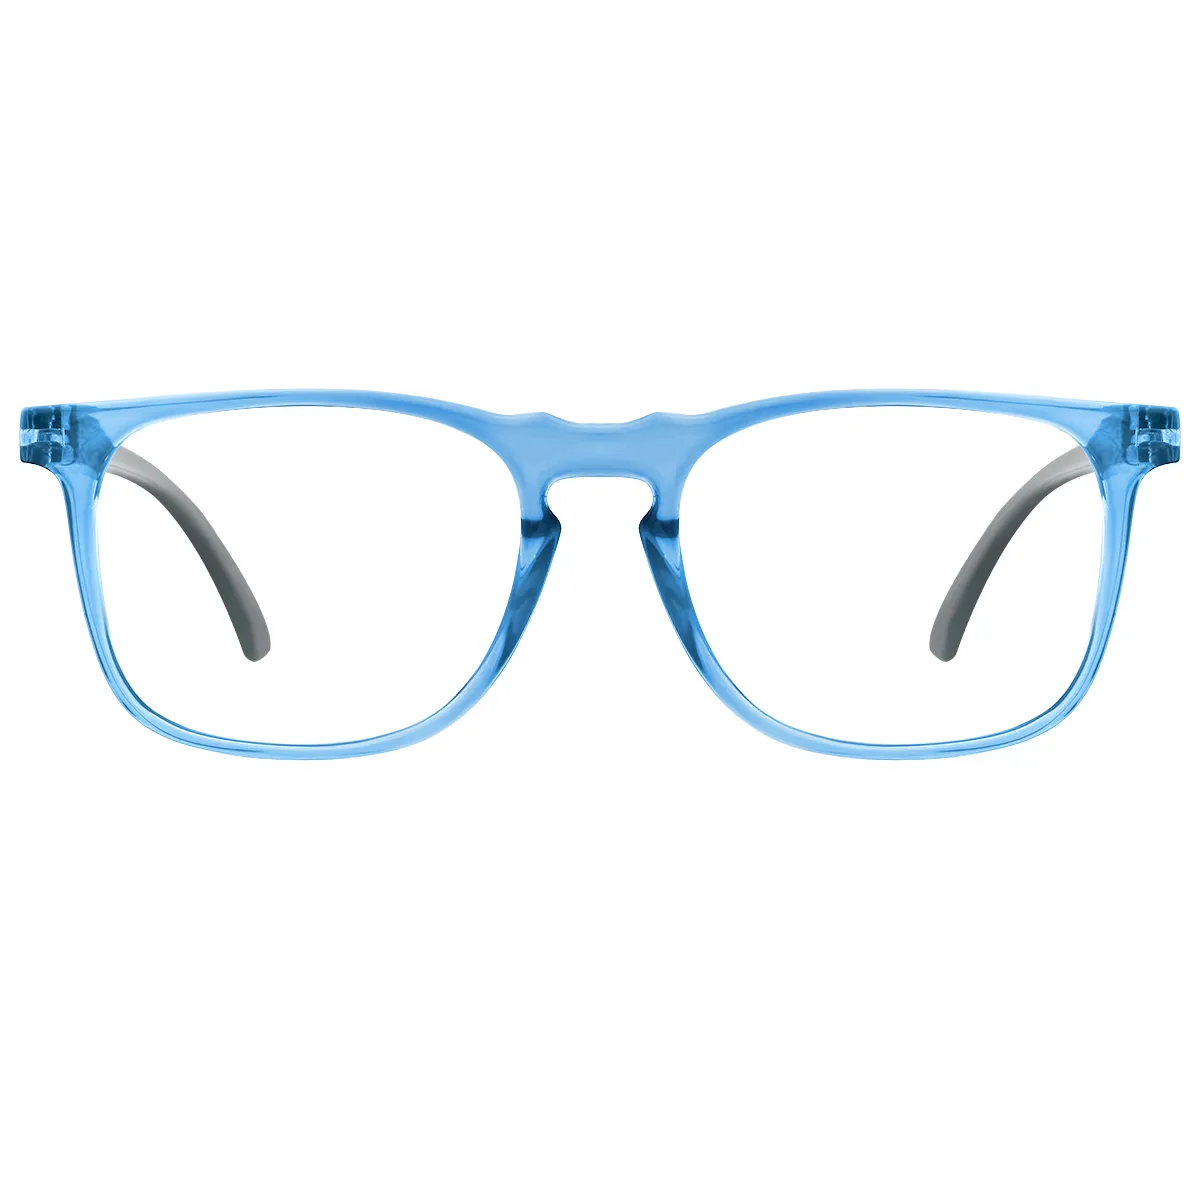 Eclipse - Square Blue Reading glasses for Men & Women